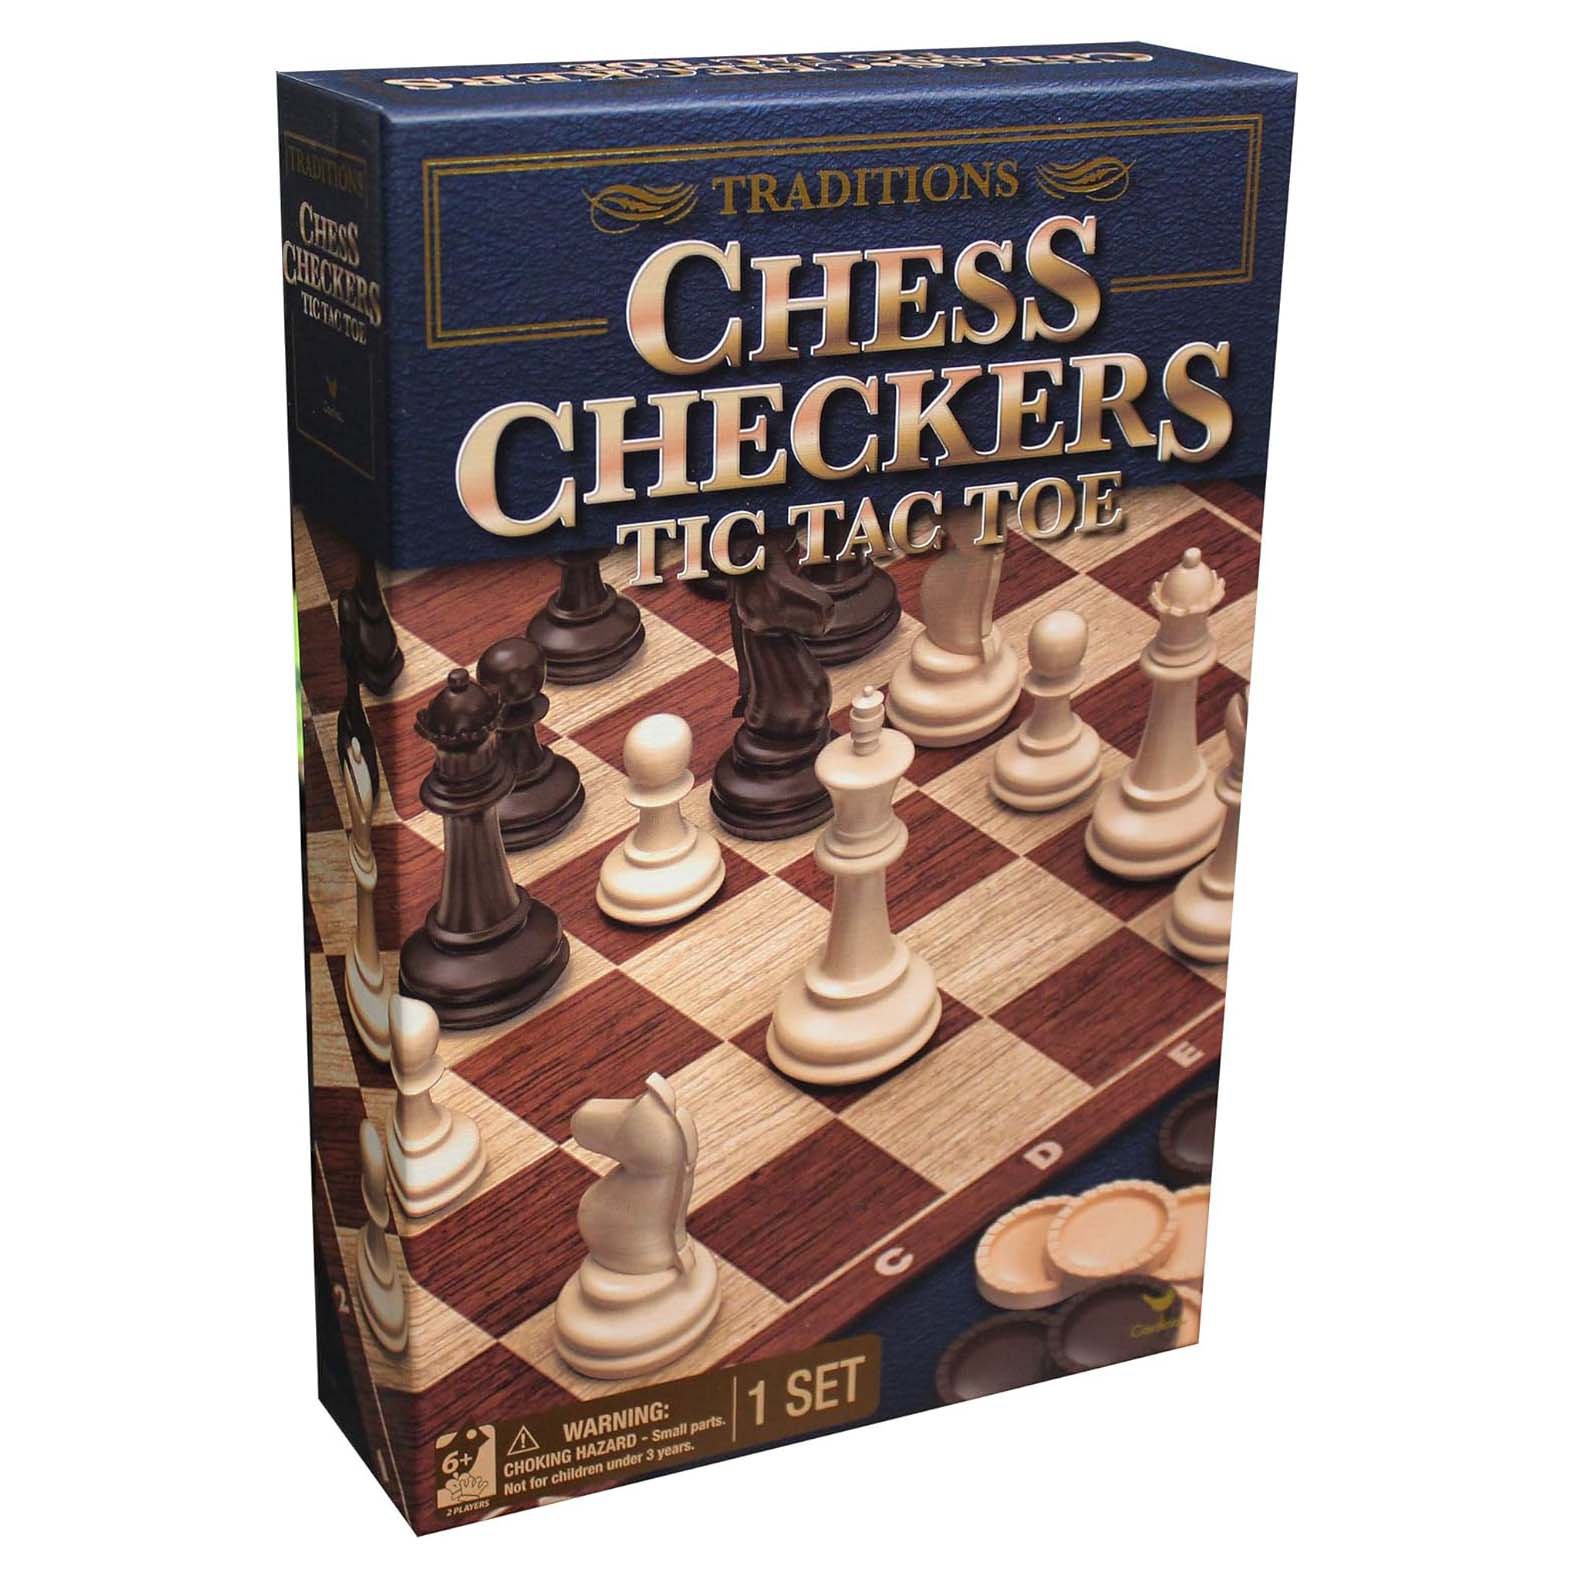 Quadro-chess and checkers